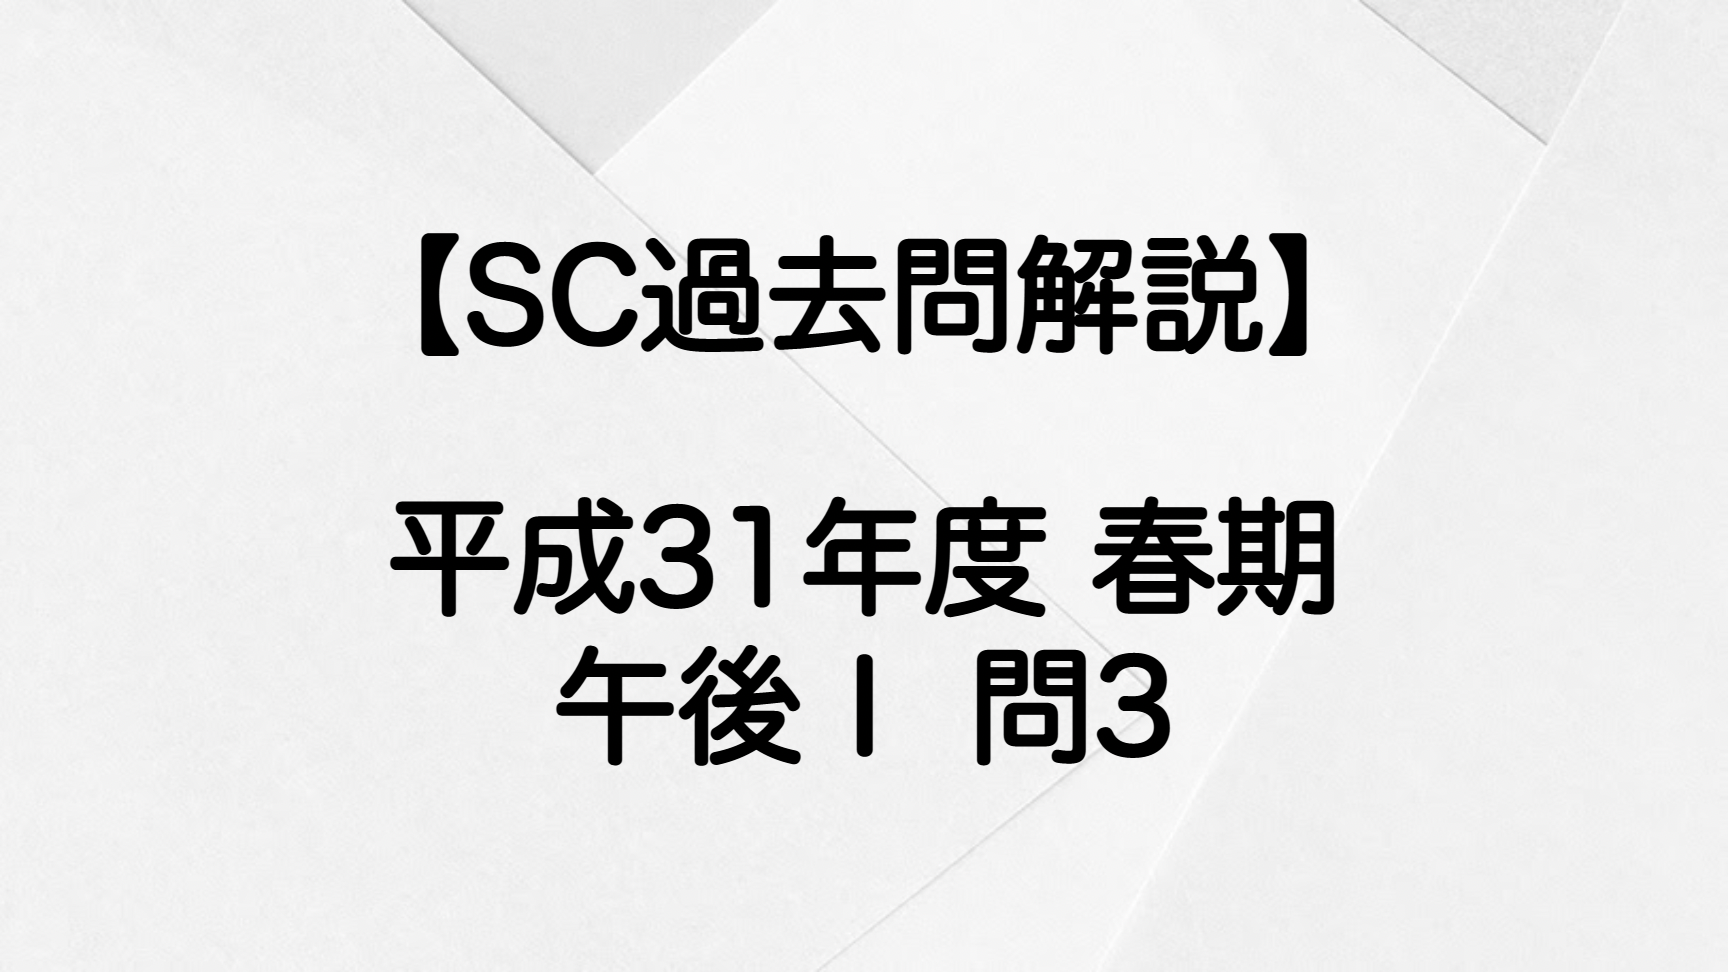 sc-h31-4-pm1-2